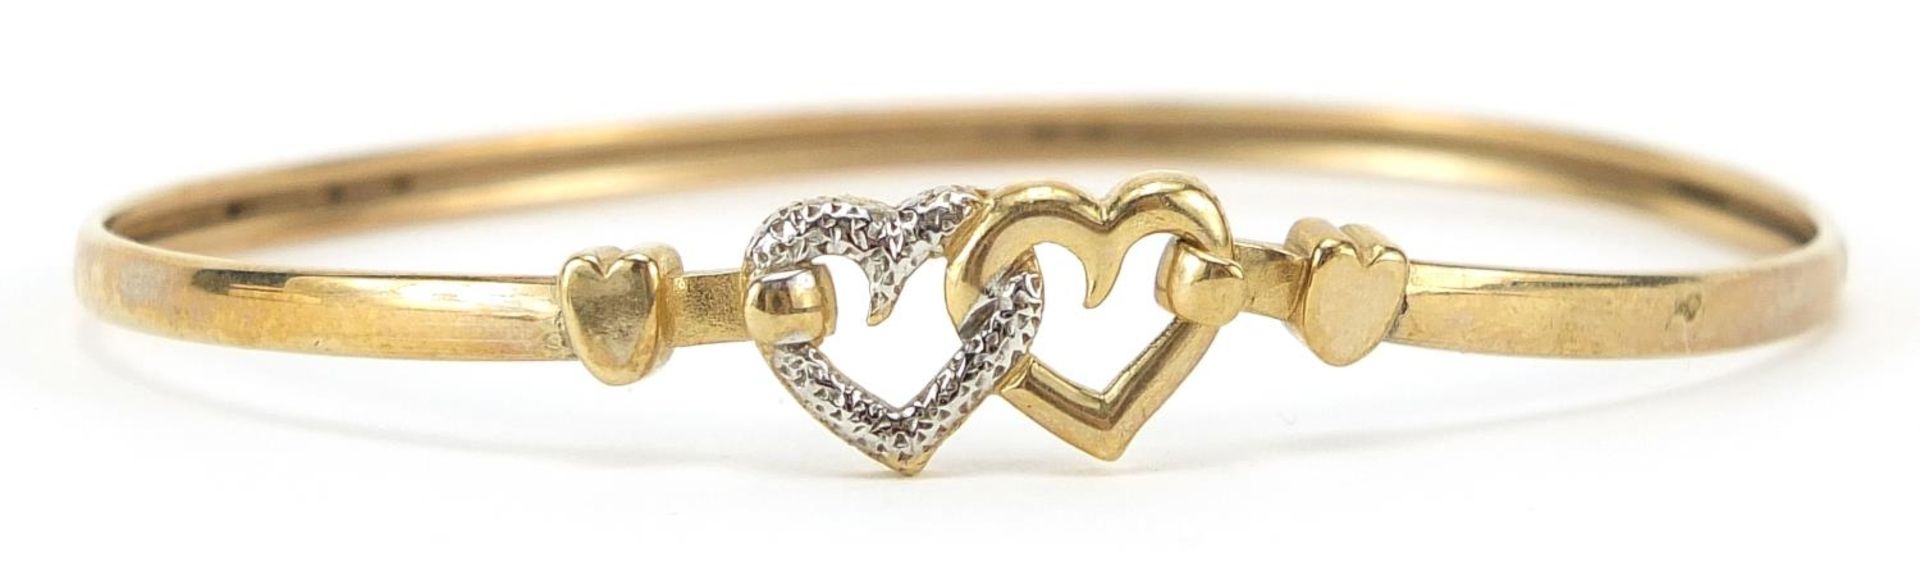 9ct gold love heart bangle, 5.9cm wide, 4.7g